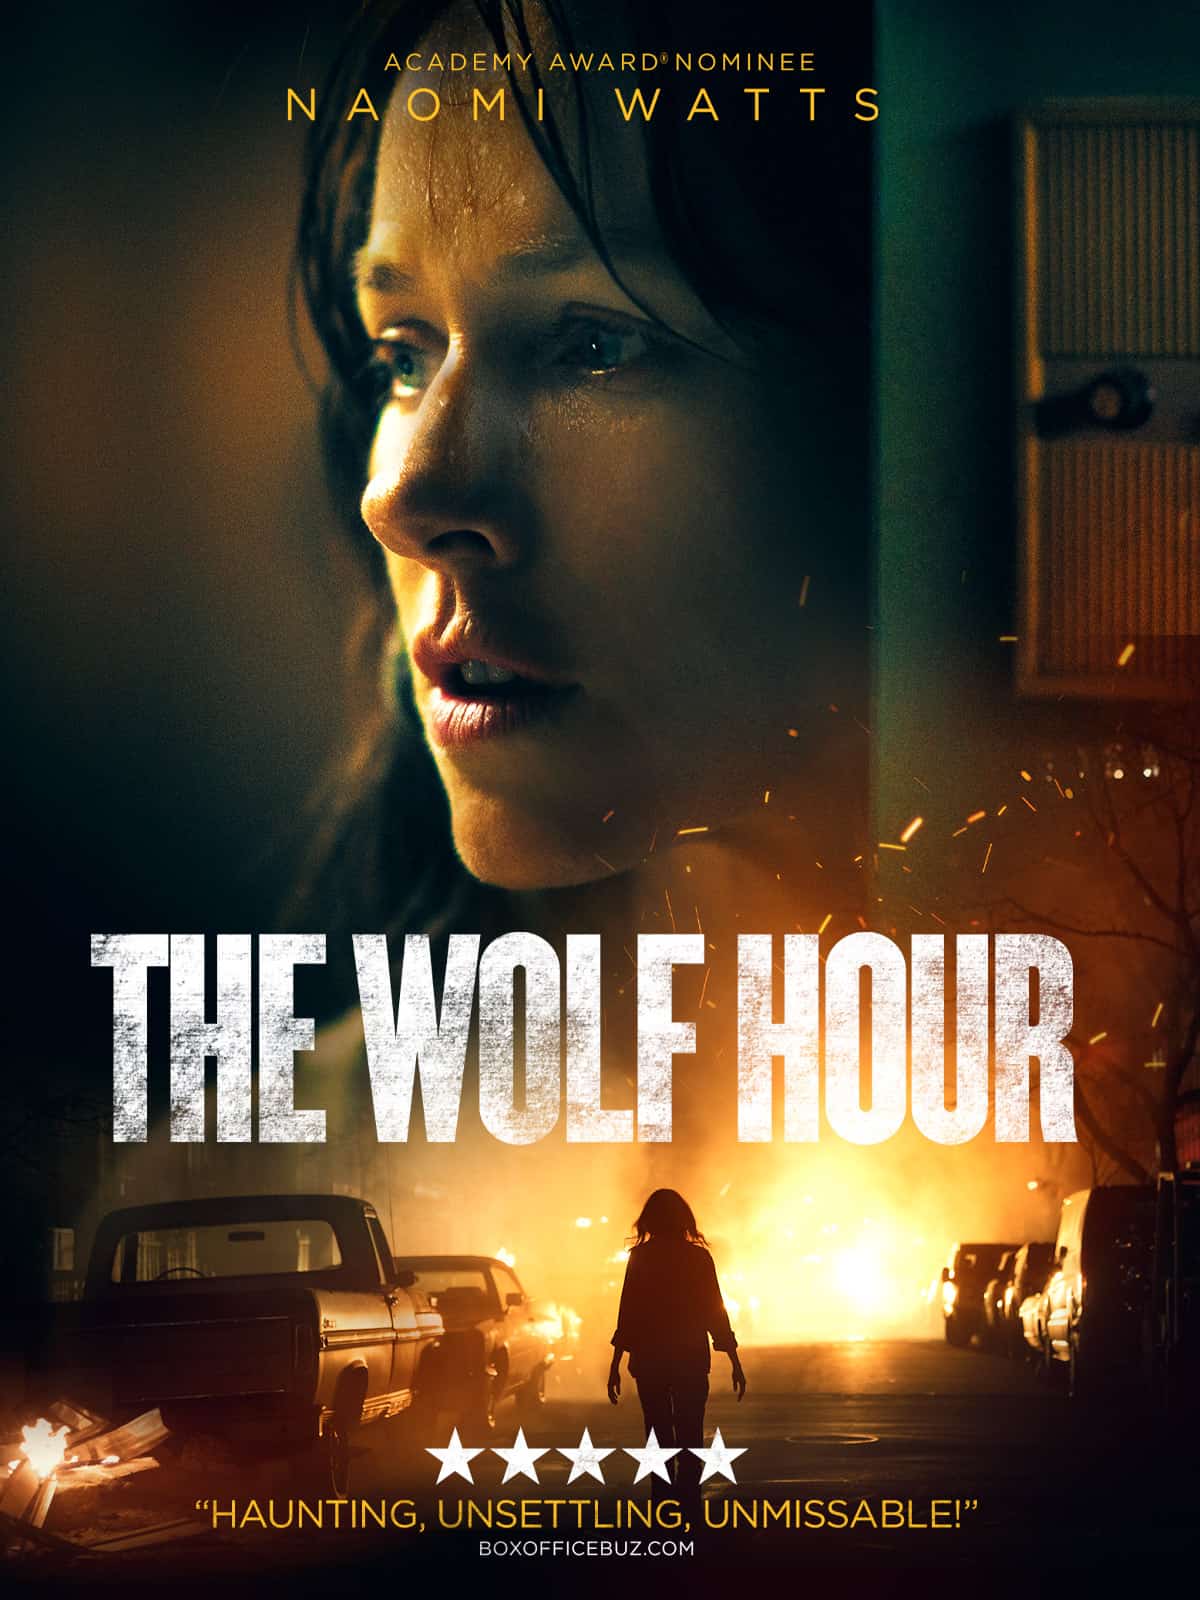 Stiahni si Filmy CZ/SK dabing Hodina vlka / The Wolf Hour (2019)(CZ) = CSFD 51%